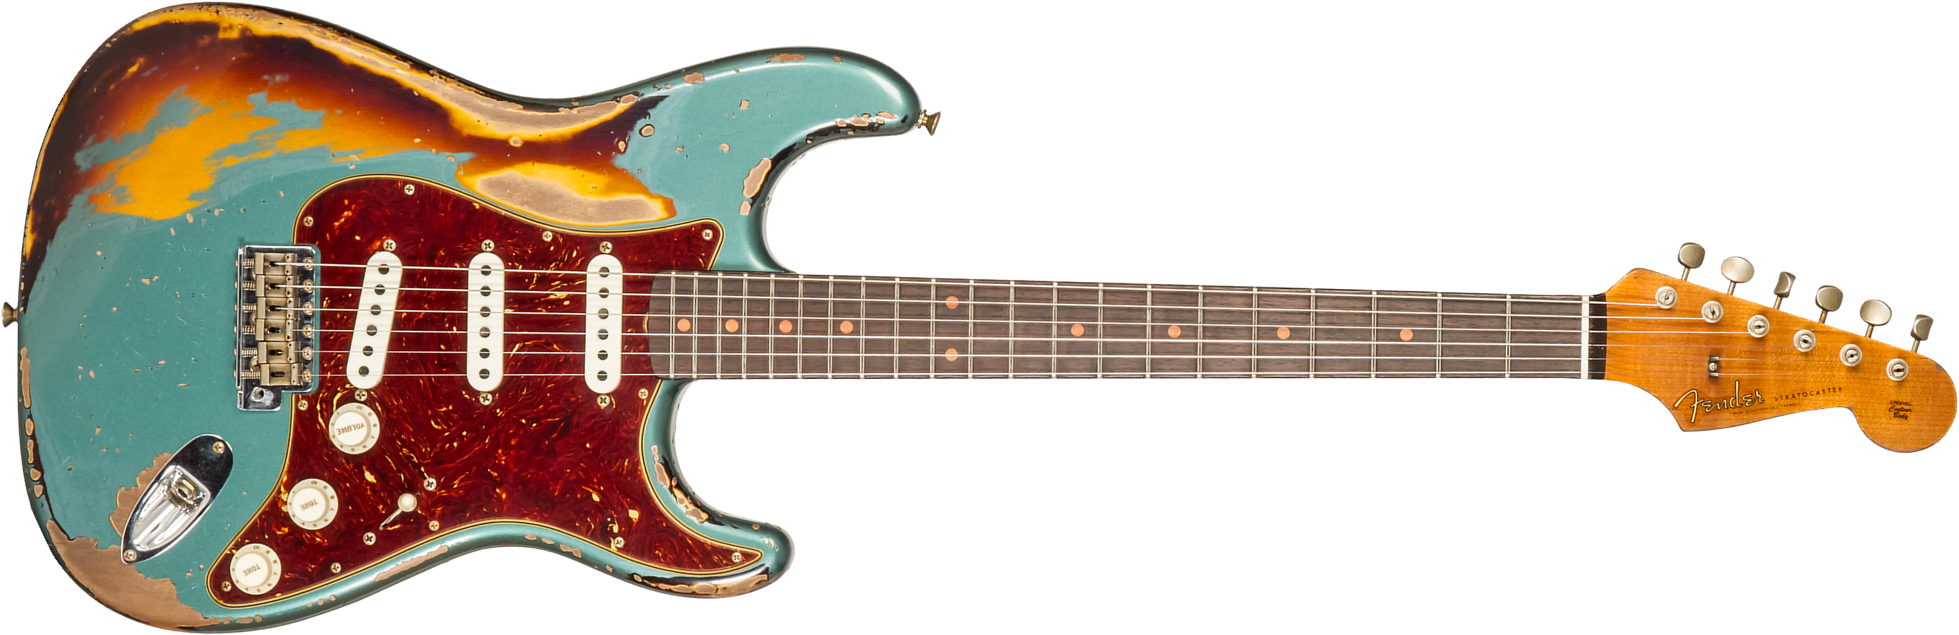 Fender Custom Shop Strat 1961 3s Trem Rw #cz573502 - Super Heavy Relic Sherwood Green Metallic O. 3-cs - Elektrische gitaar in Str-vorm - Main picture